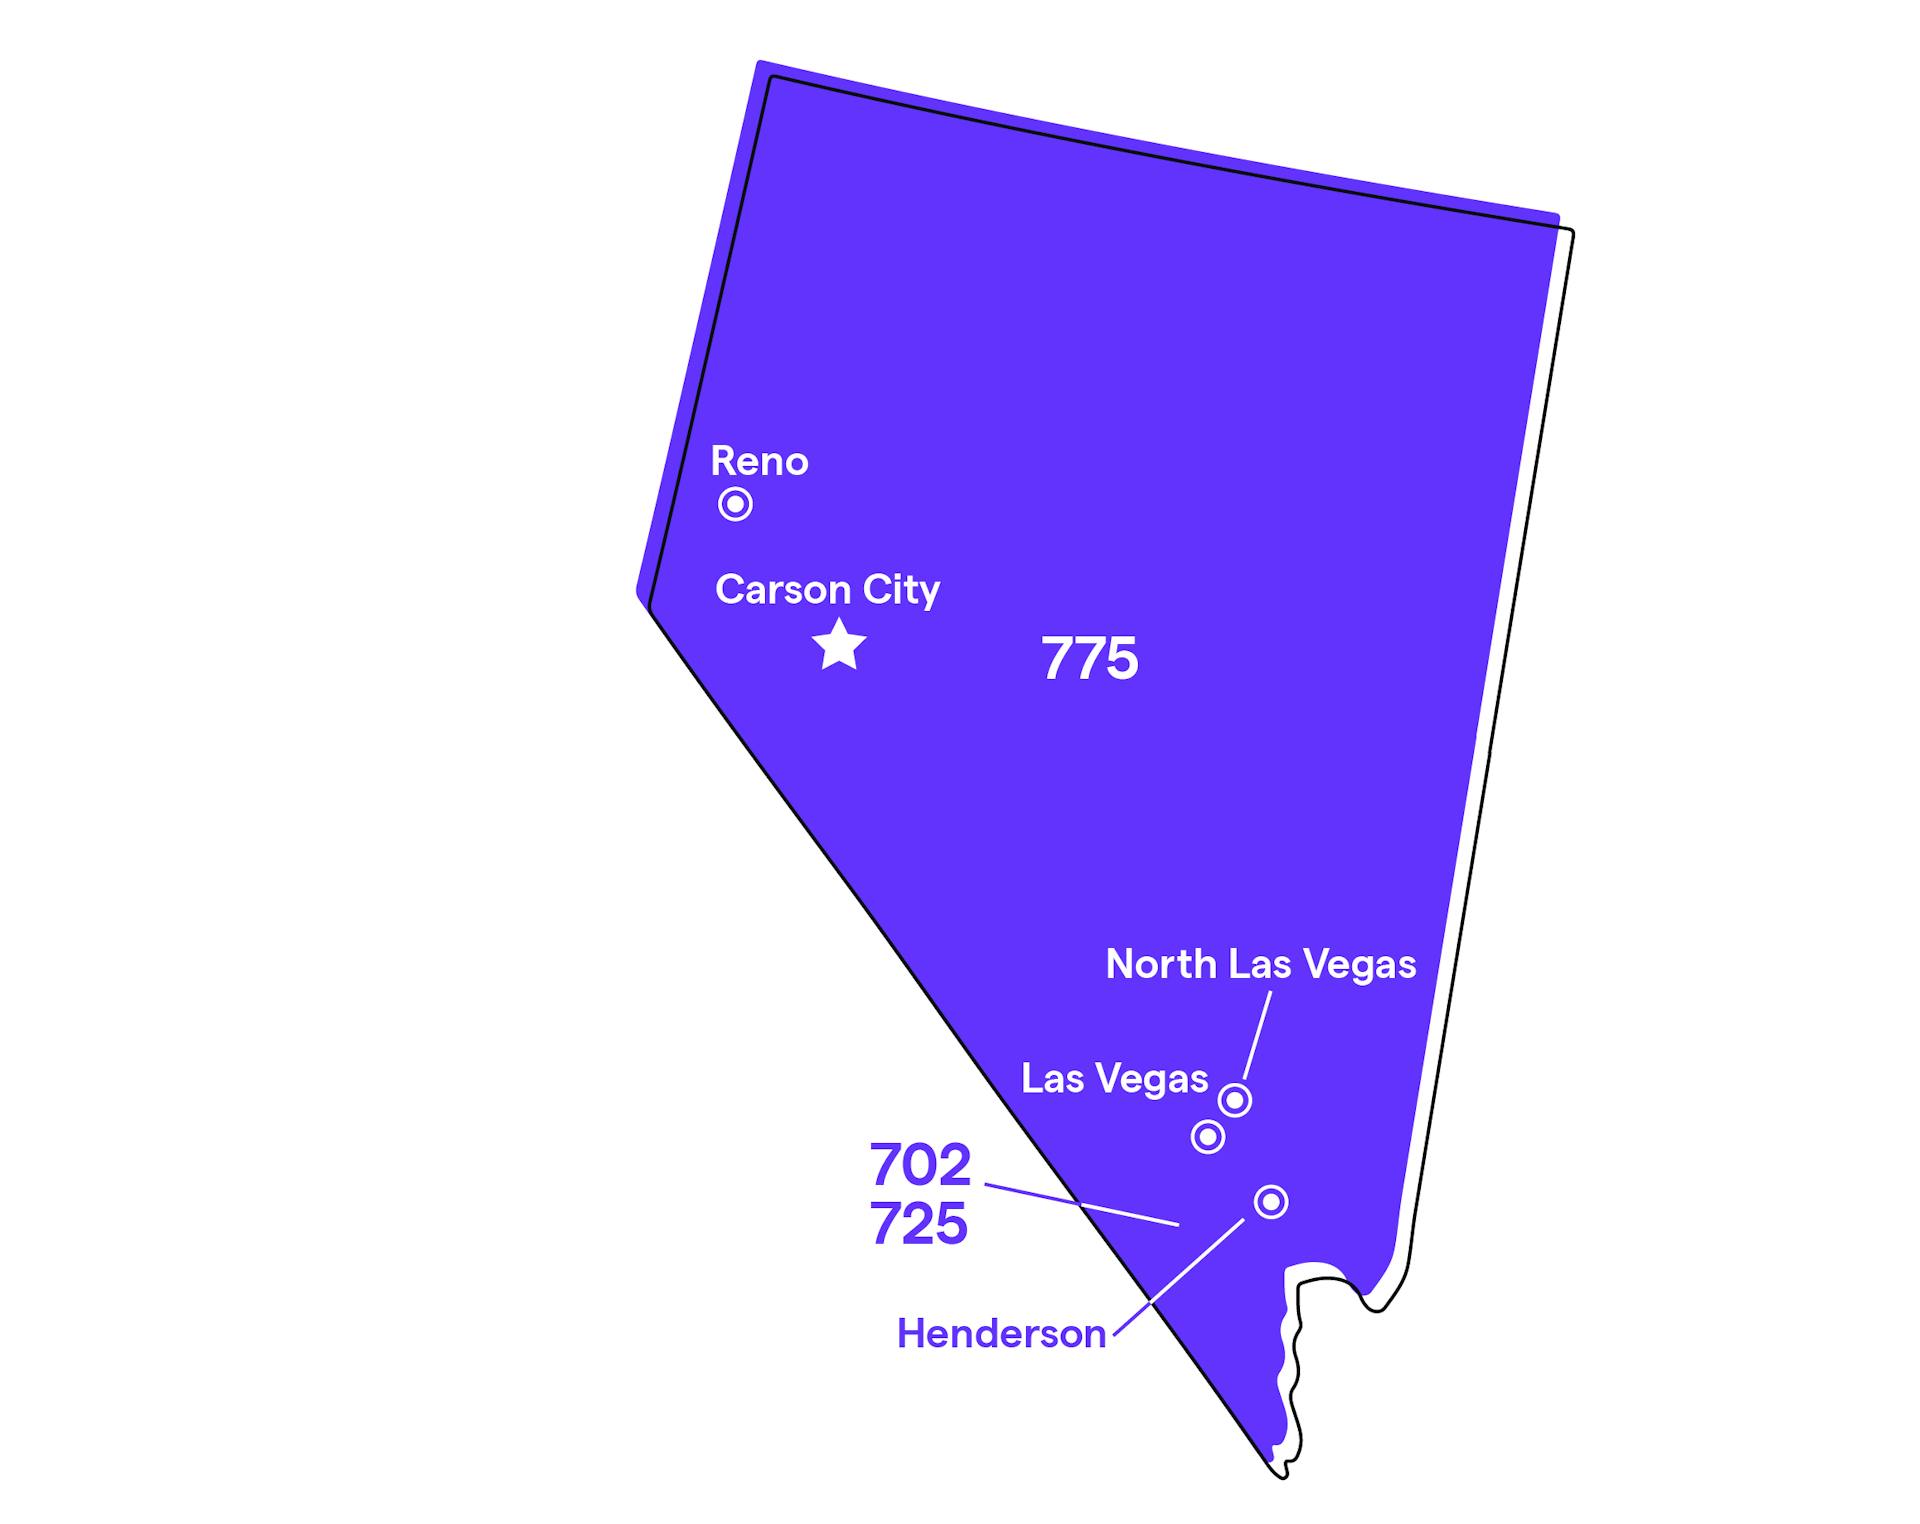 Nevada Area Codes